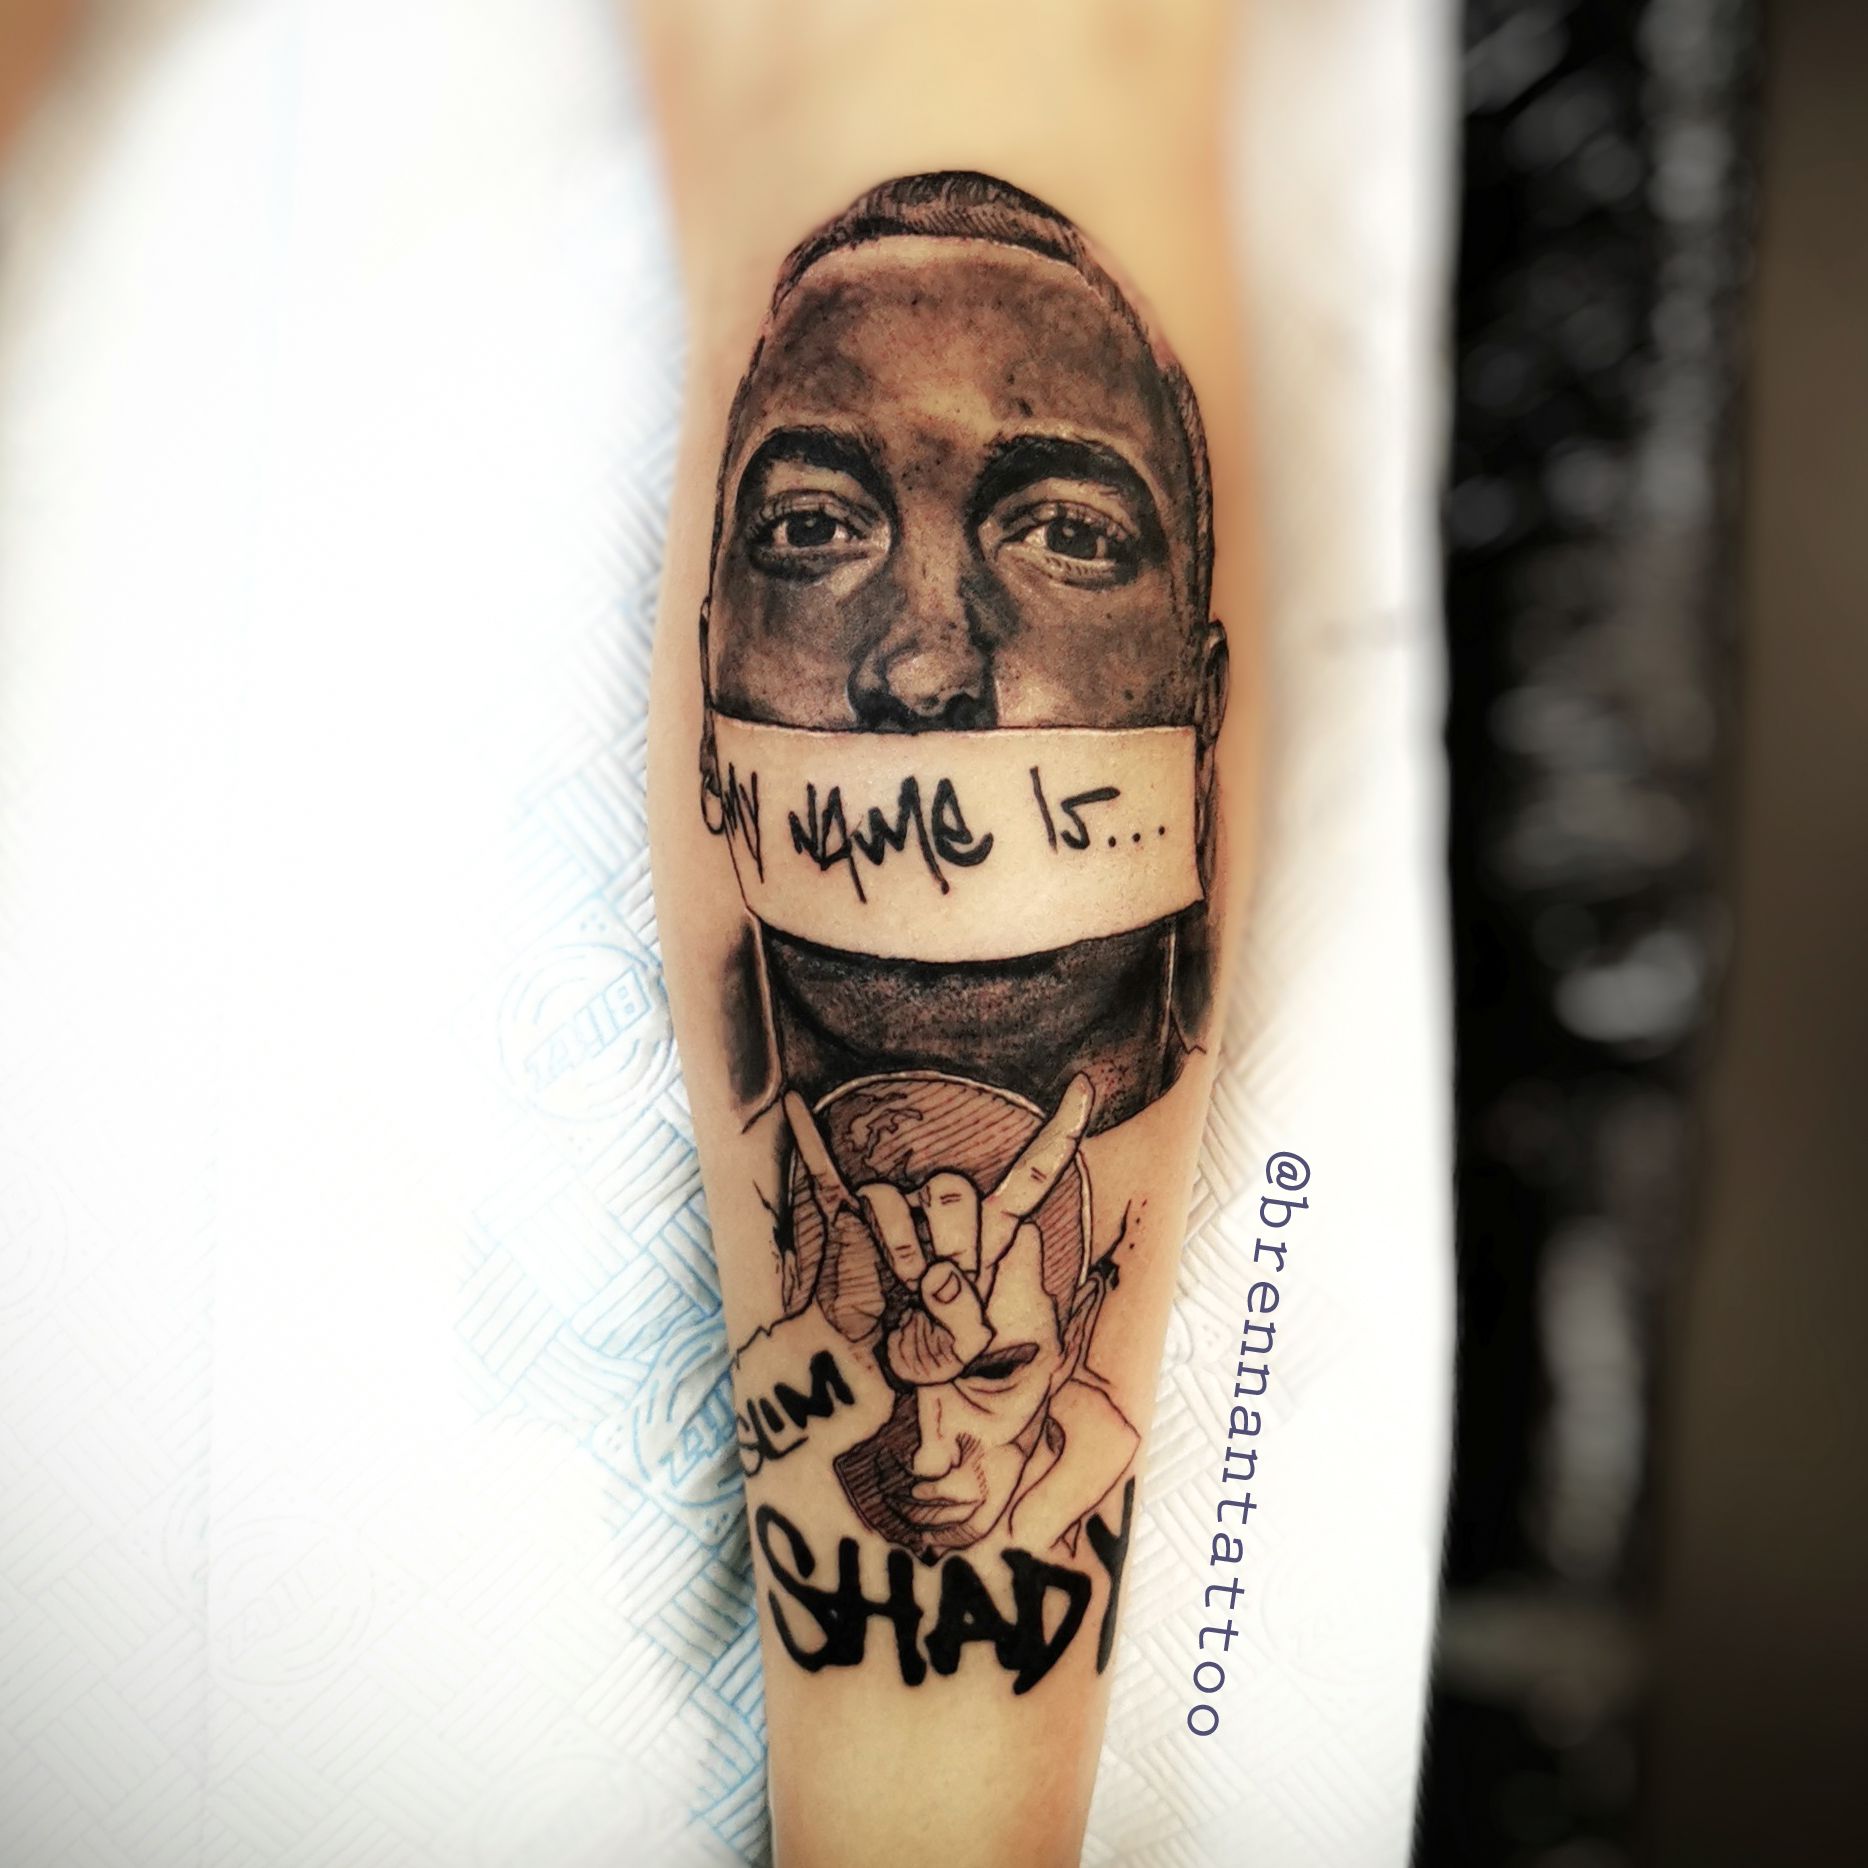 Does Eminem Have Tattoos?